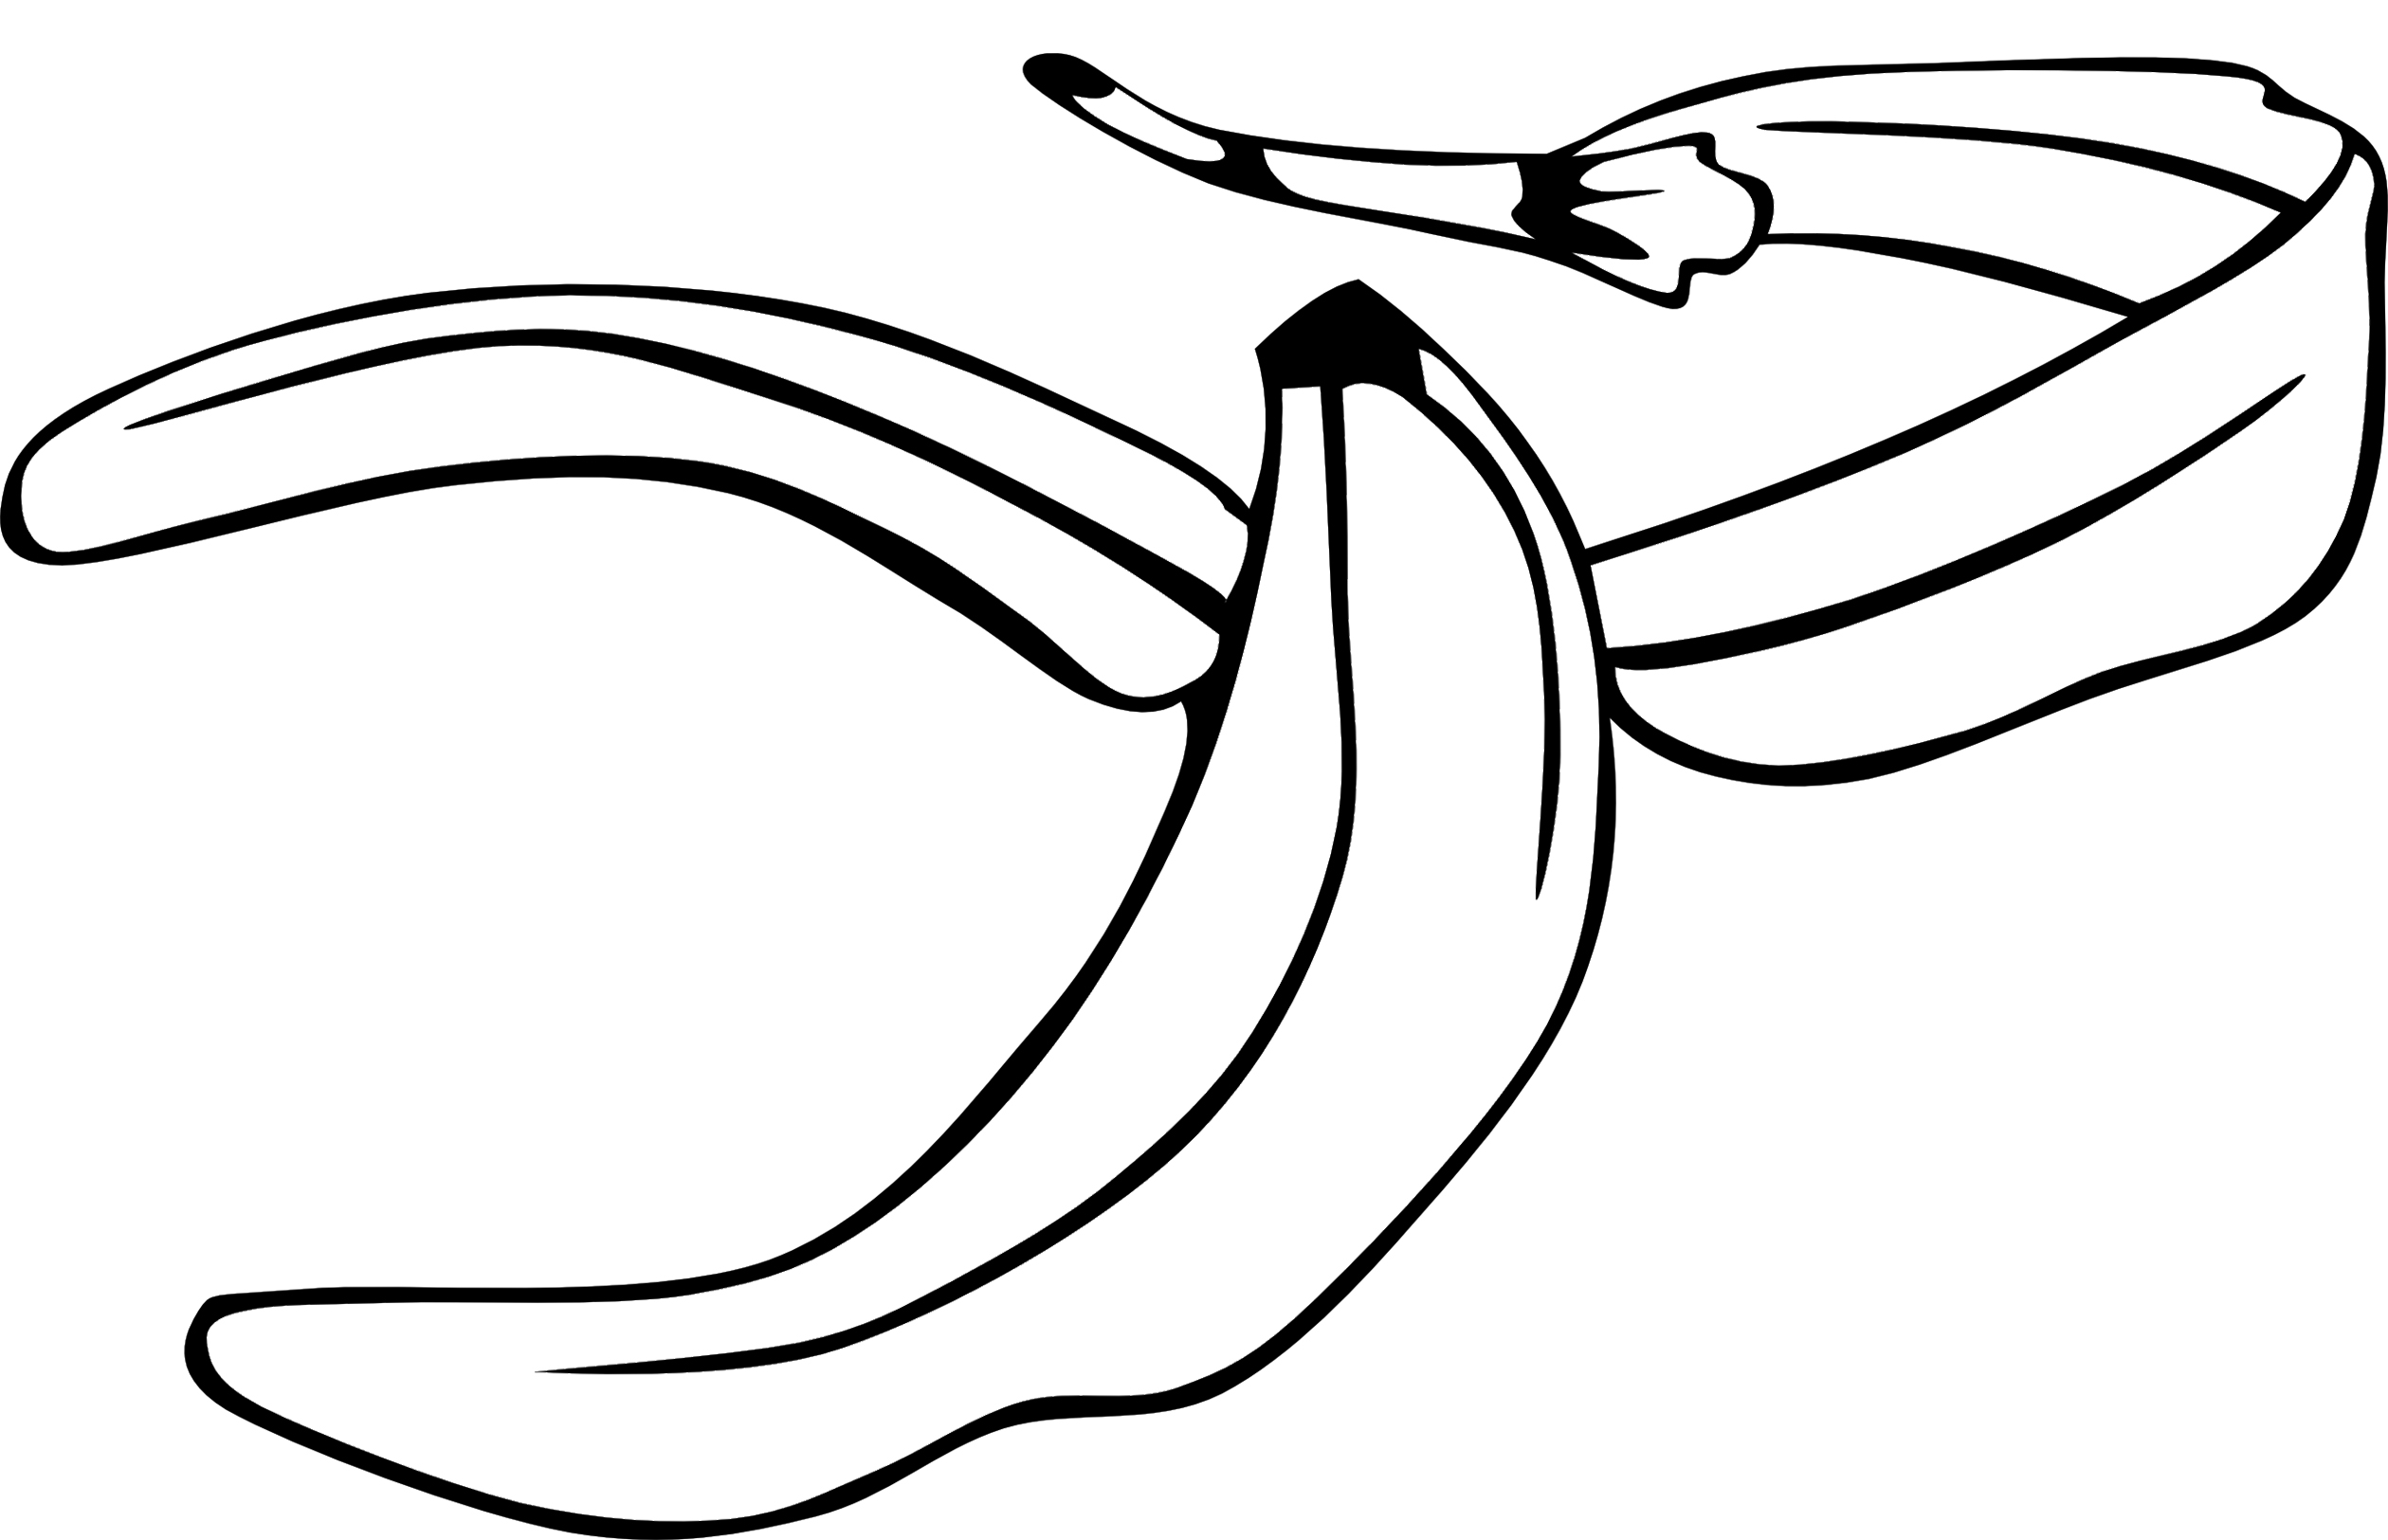 Banana Peel Clip Art. Artclip - Banana Peel Clipart